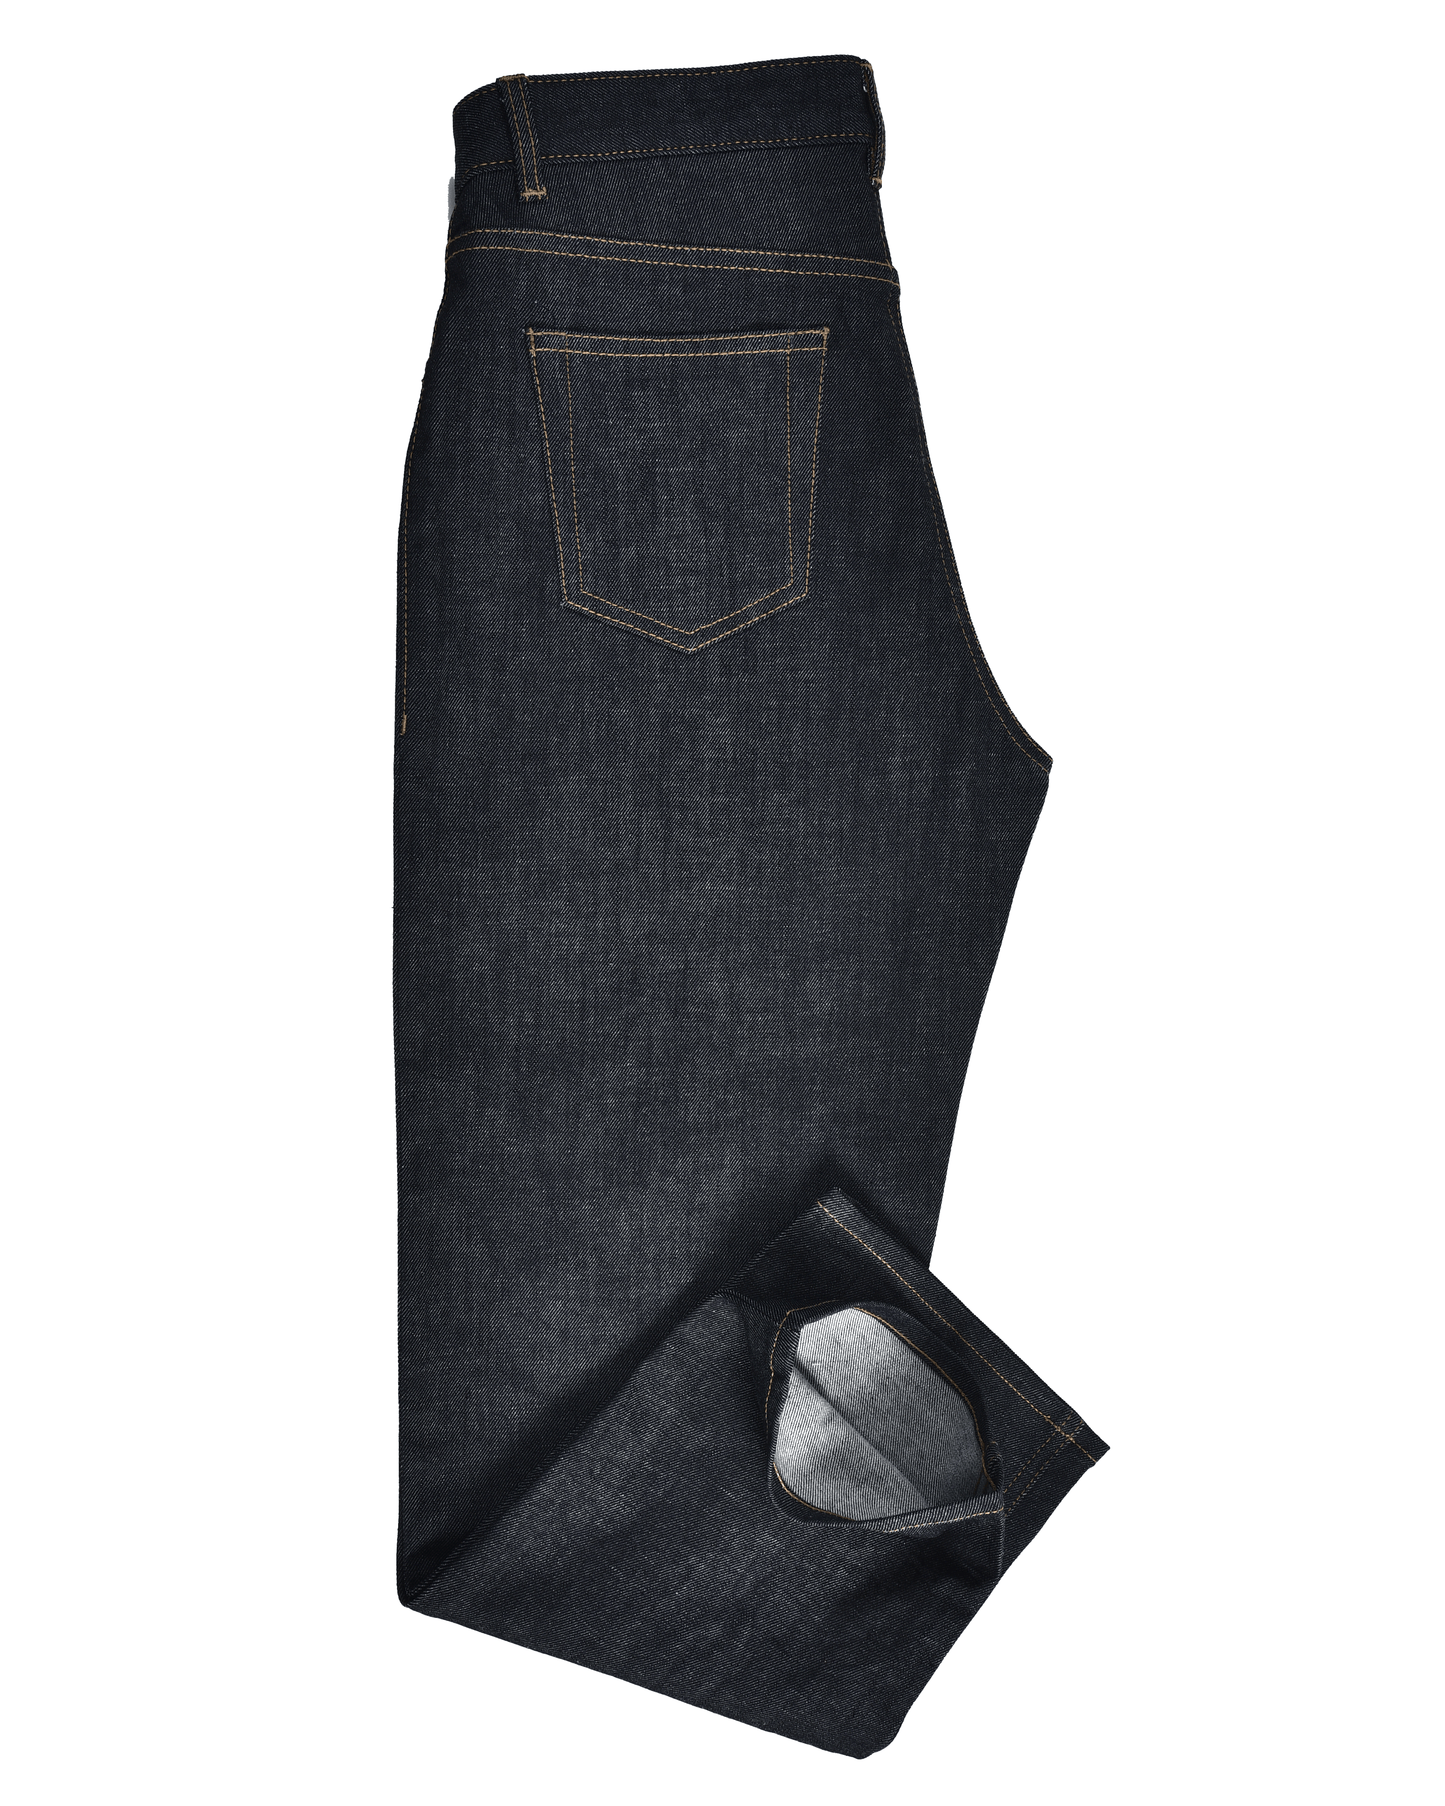 Side view of custom denim jeans for men by Luxire in dark indigo